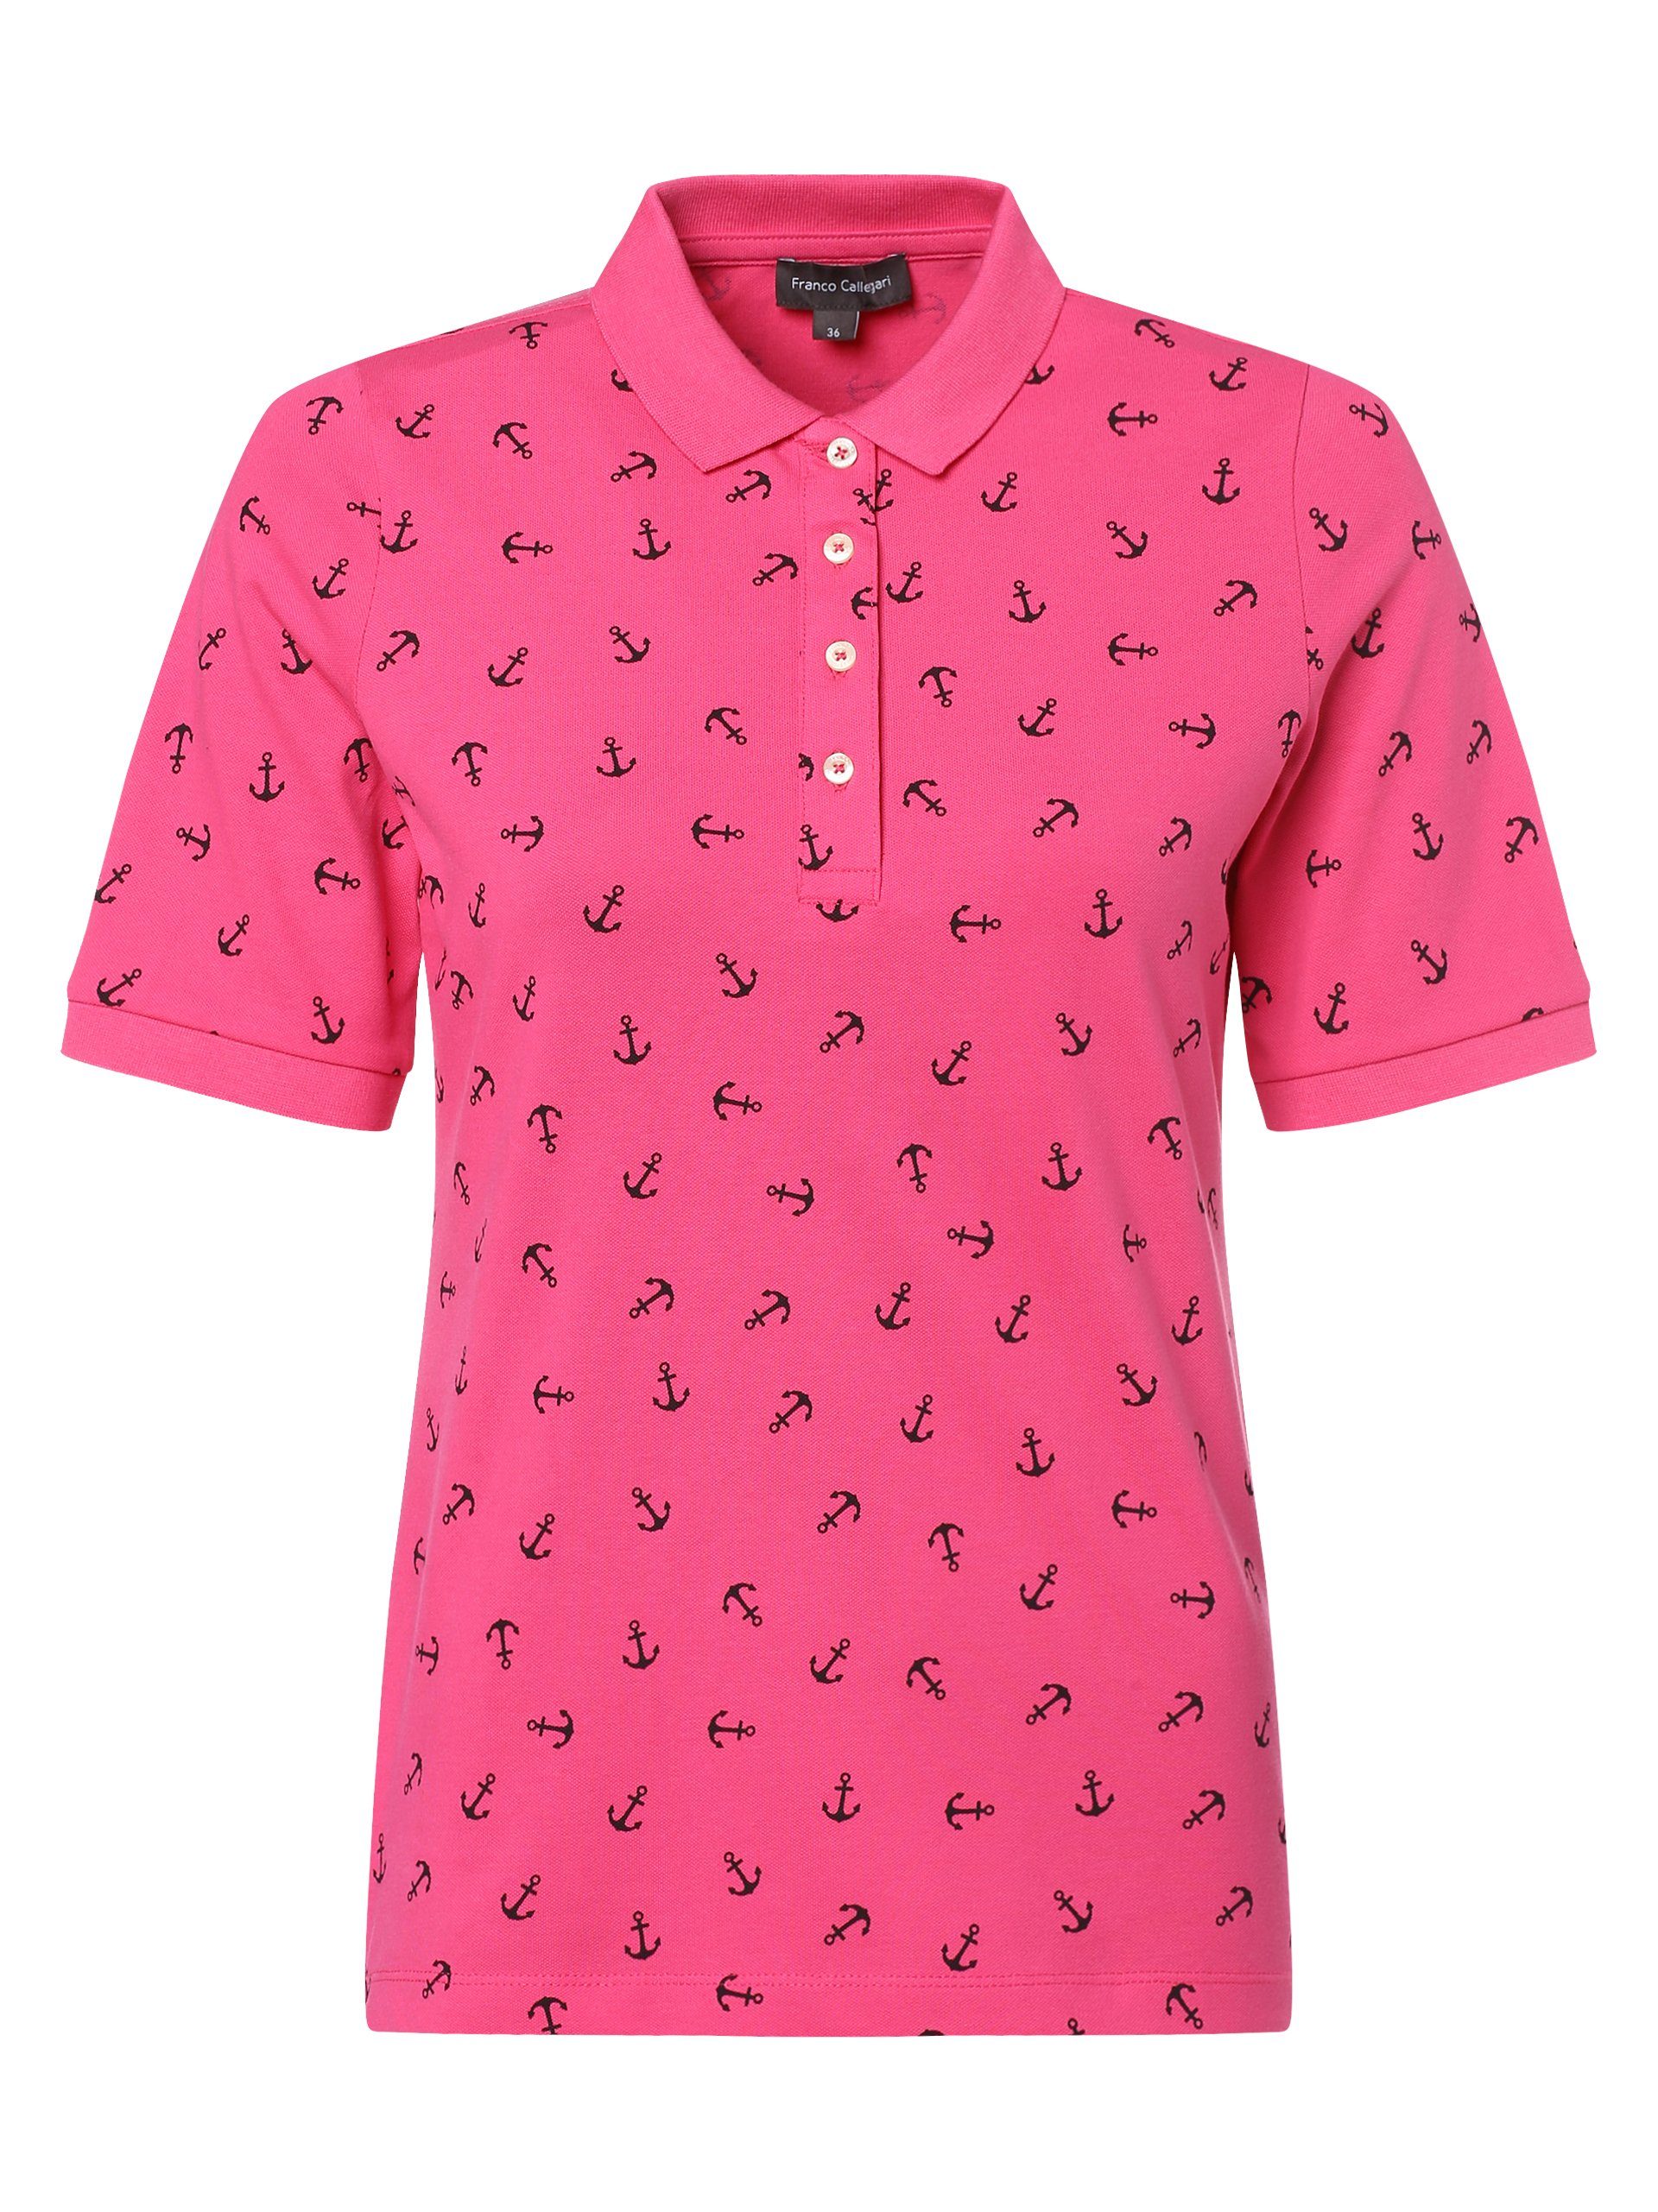 Franco Callegari Poloshirt pink marine | Poloshirts